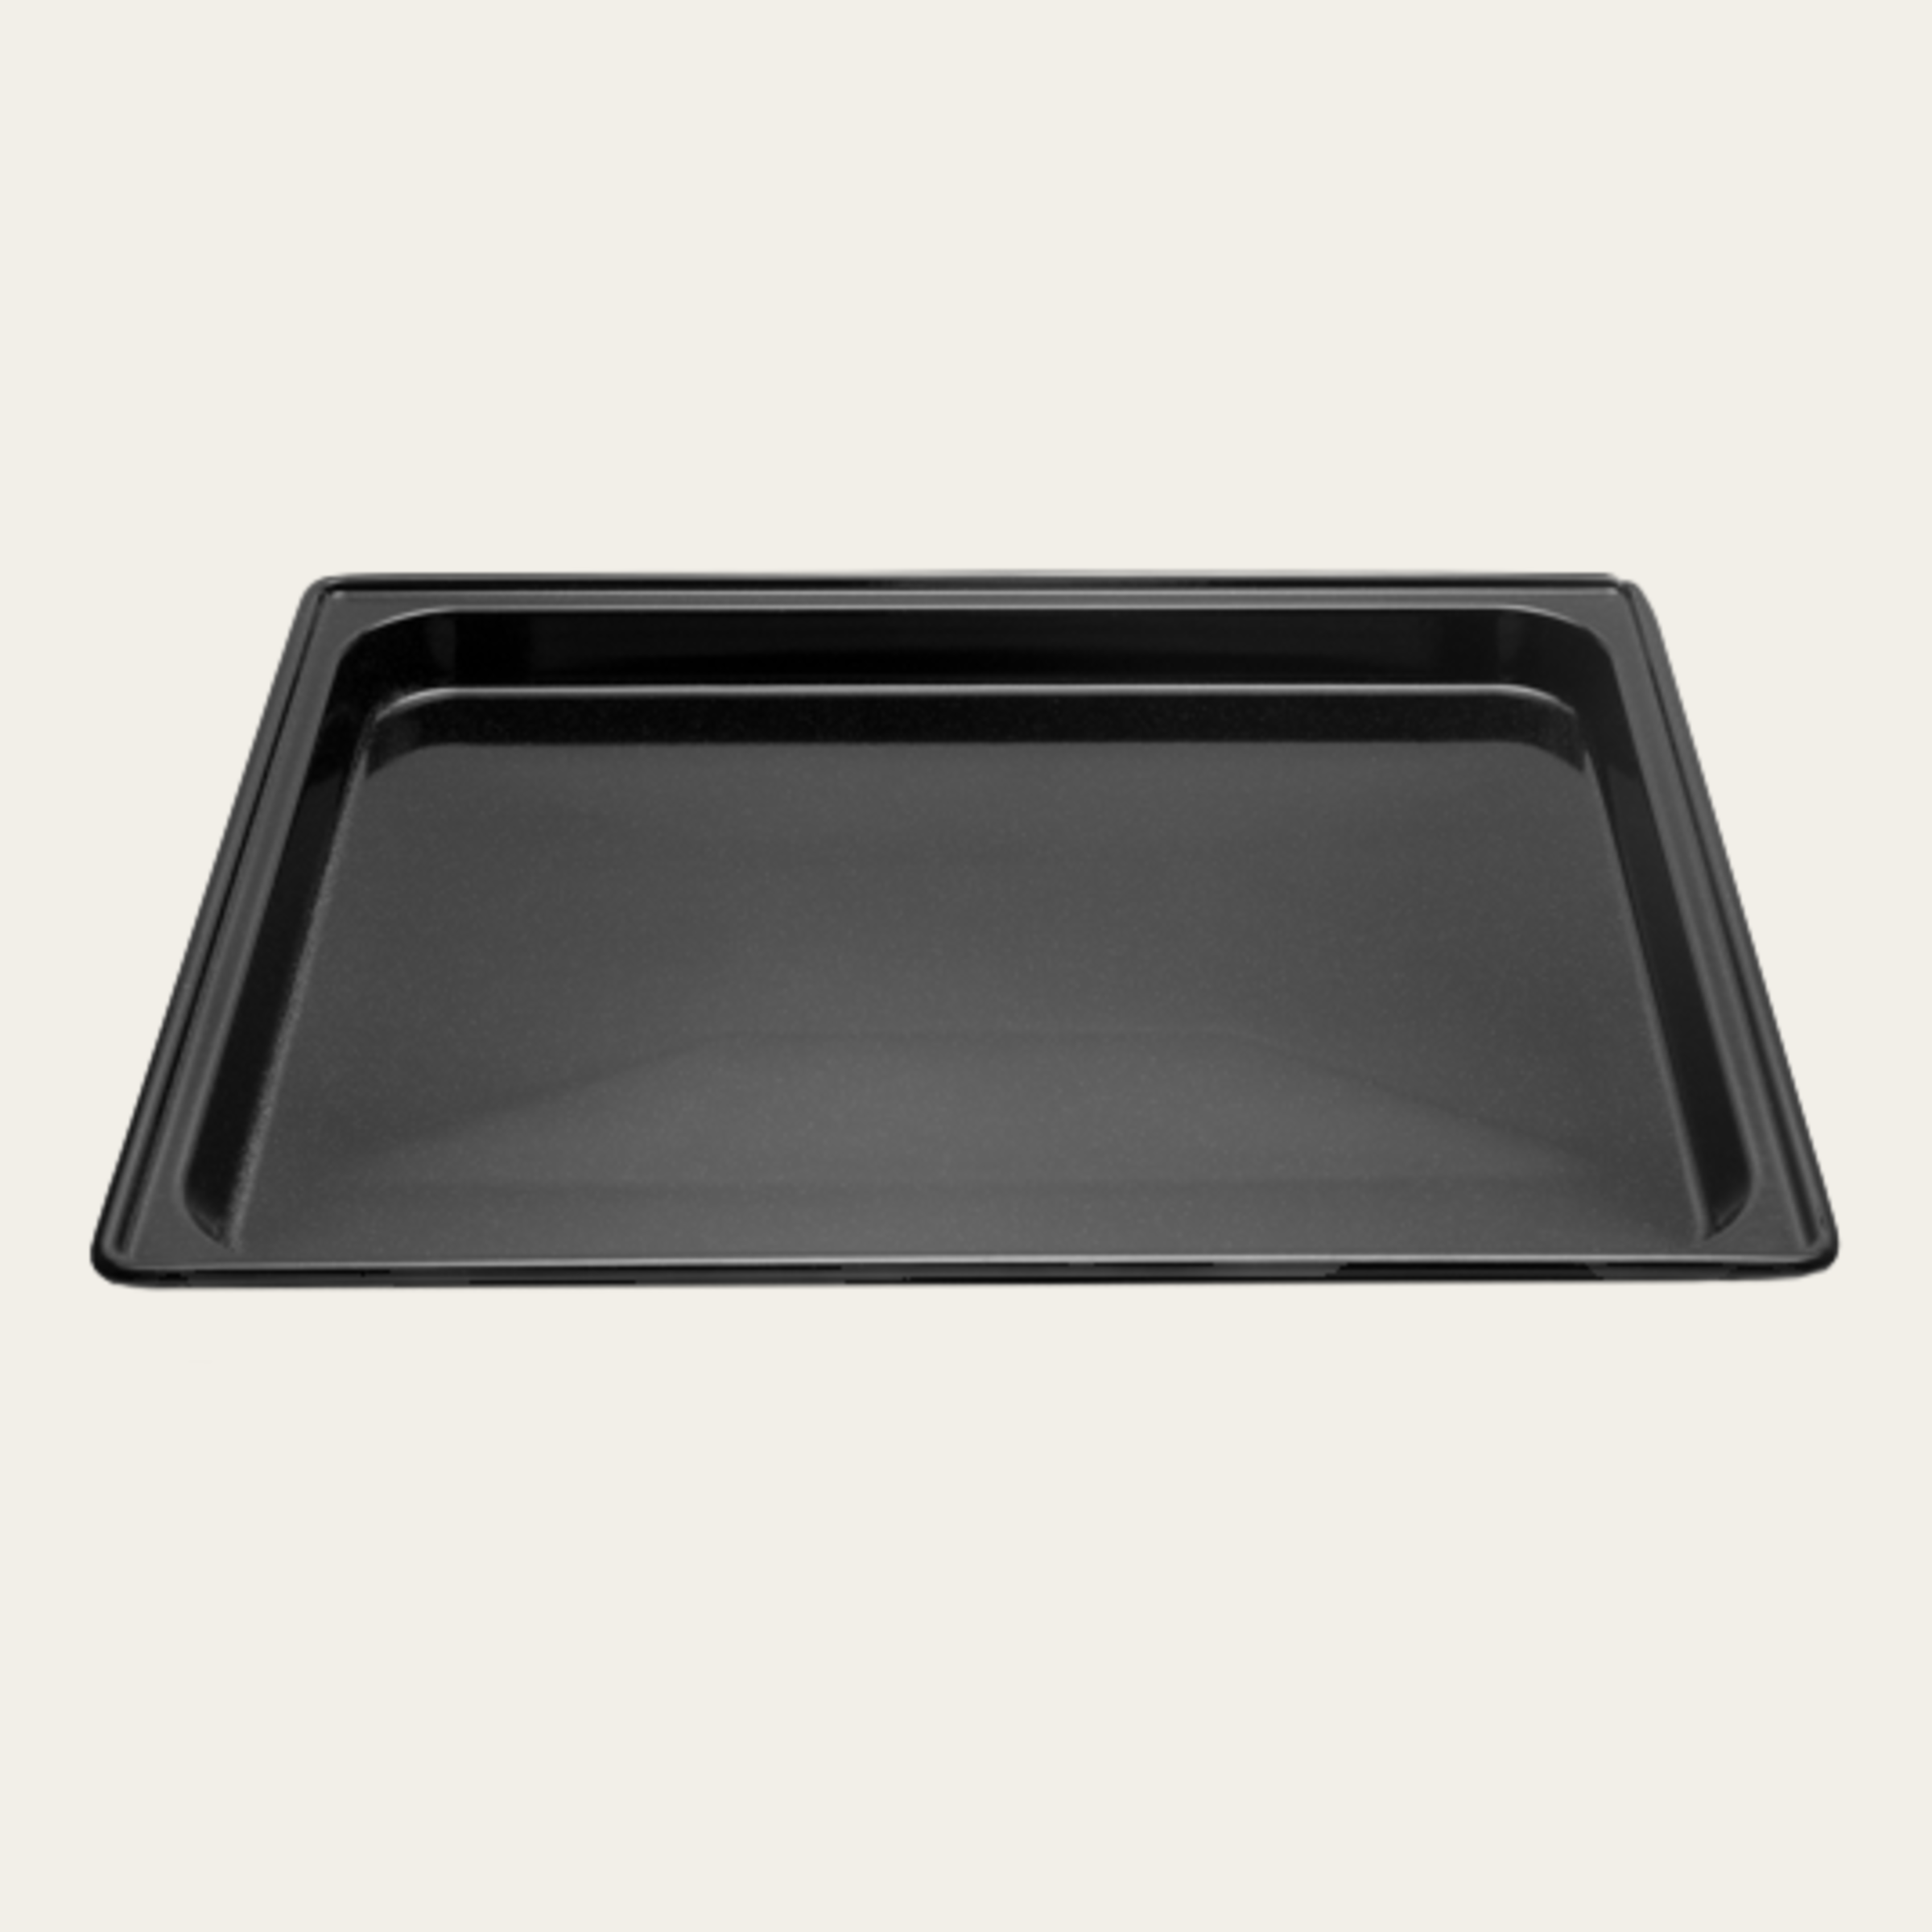 Baking tray "TopClean" 452 x 380 x 28 mm